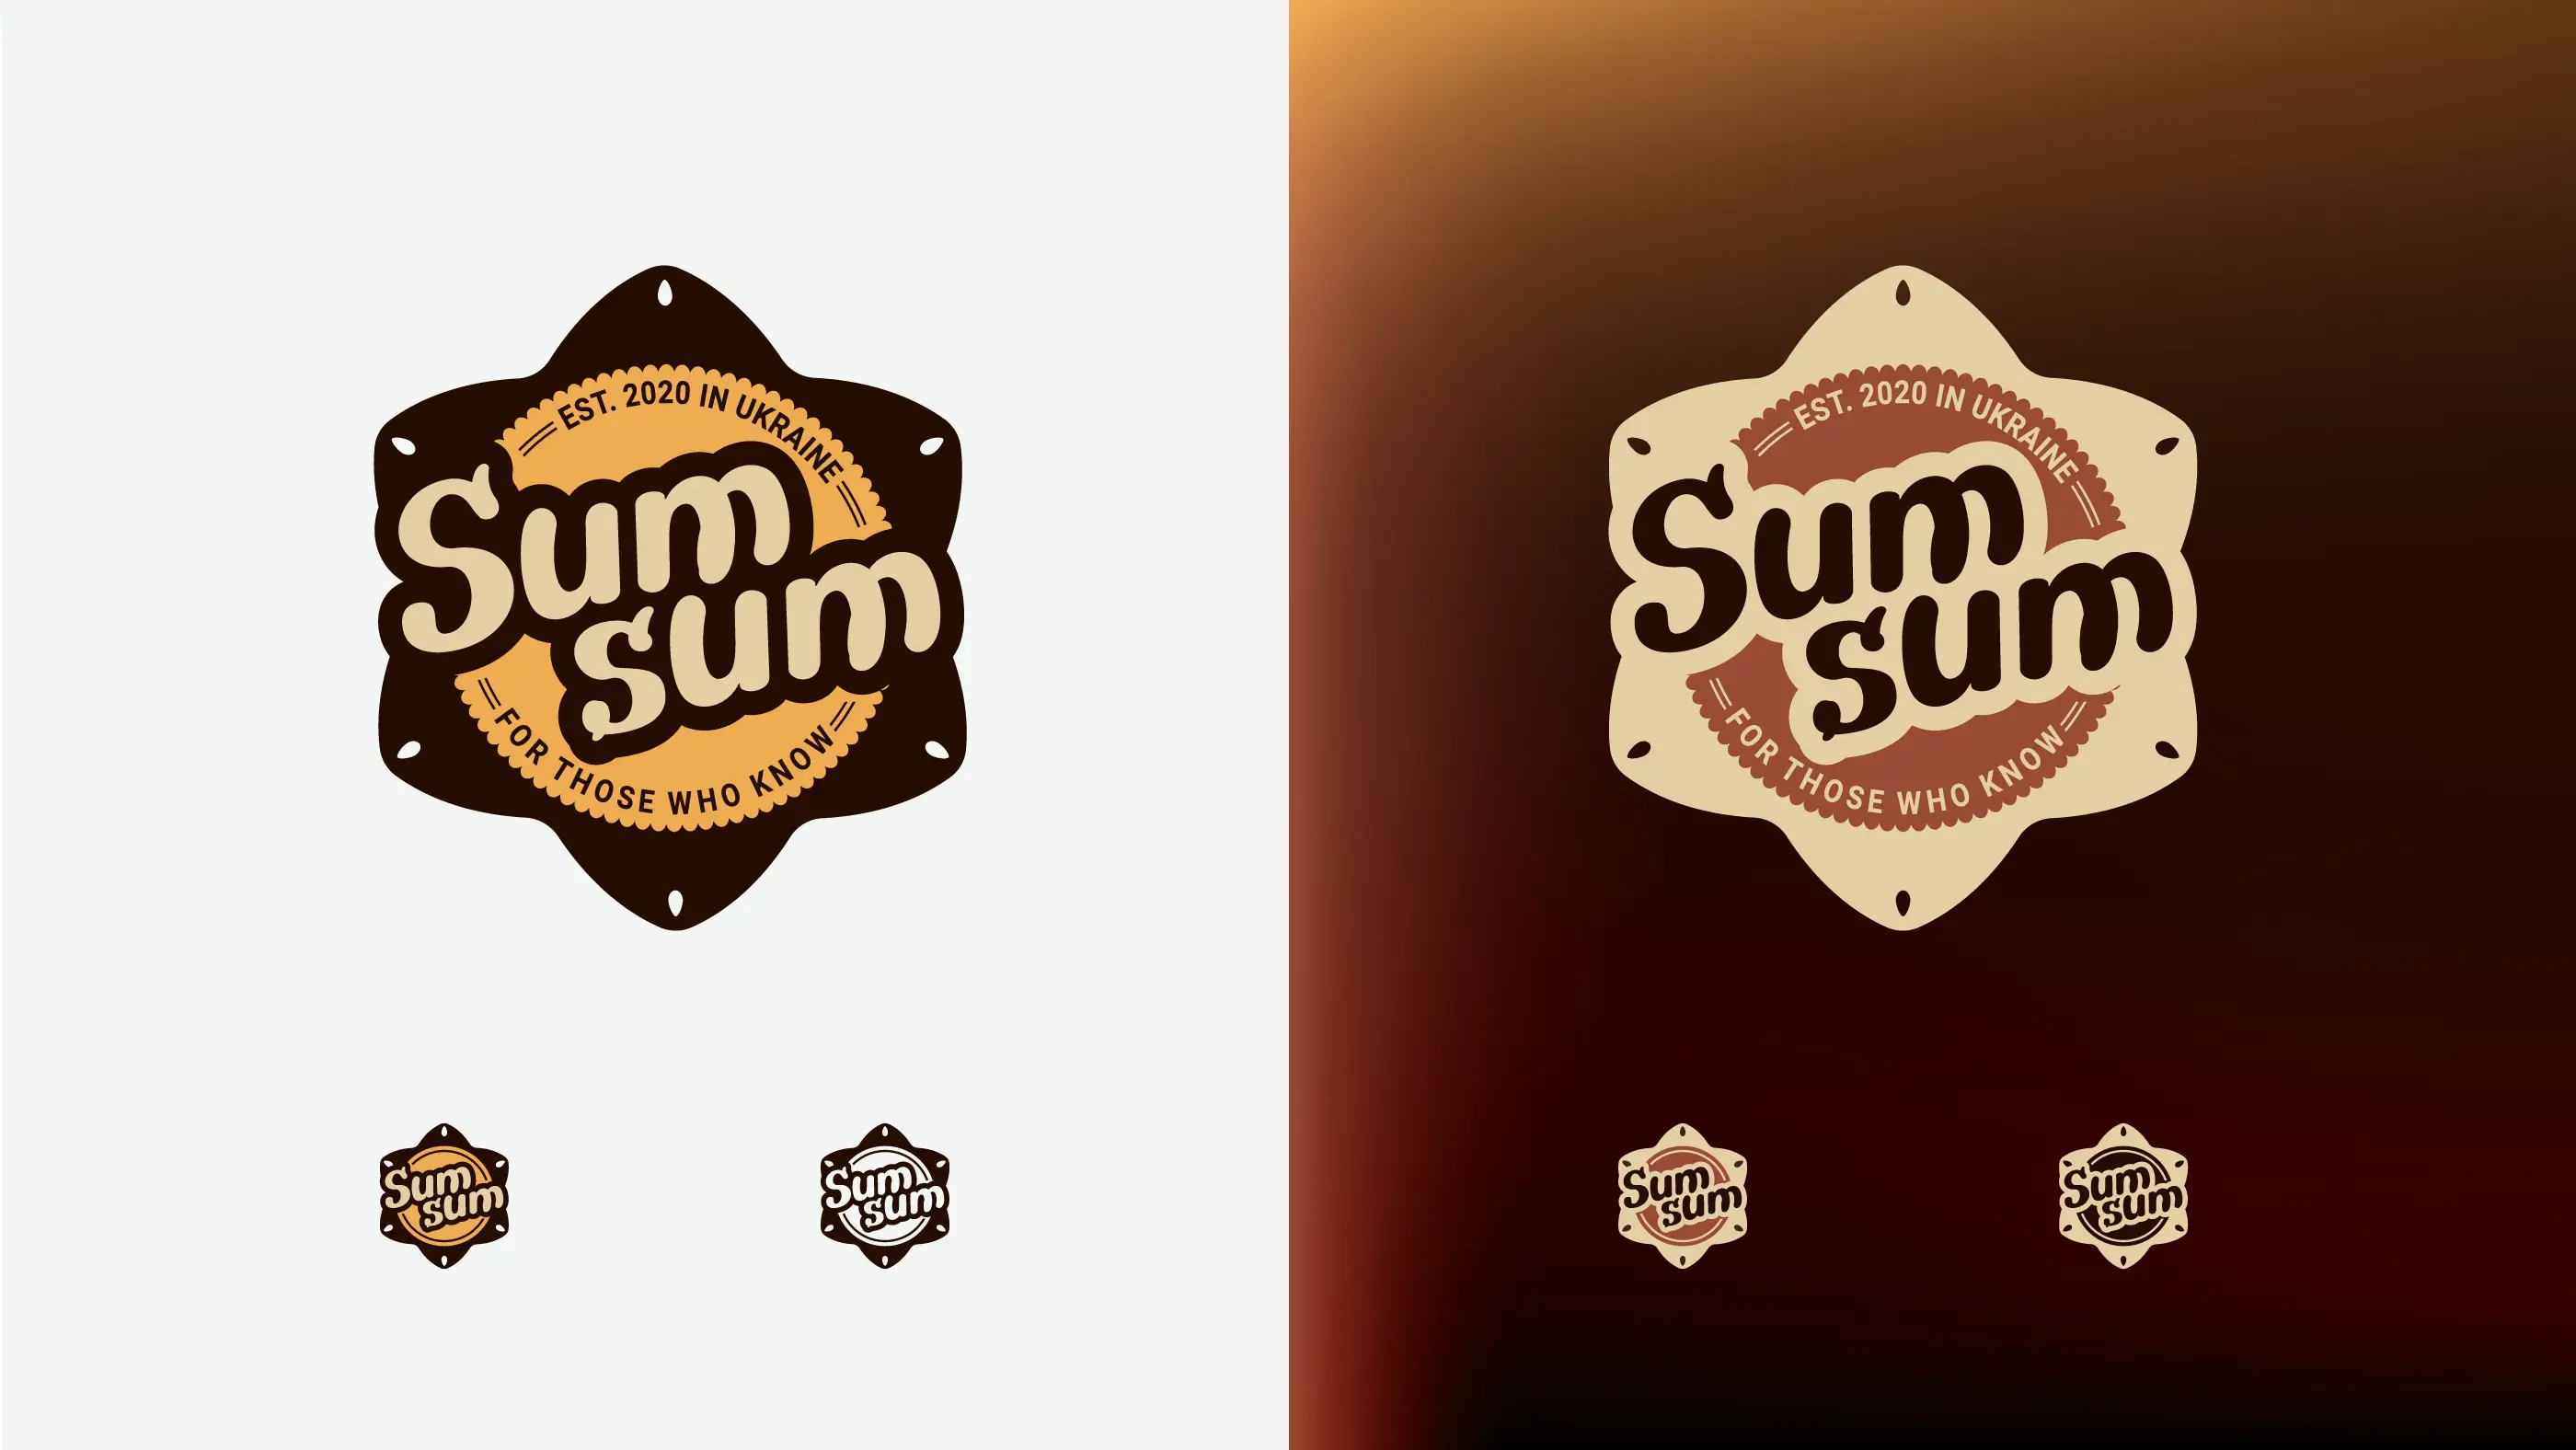 Дизайн лого, іллюстрації та концепт пакування — хумус «SumSum»